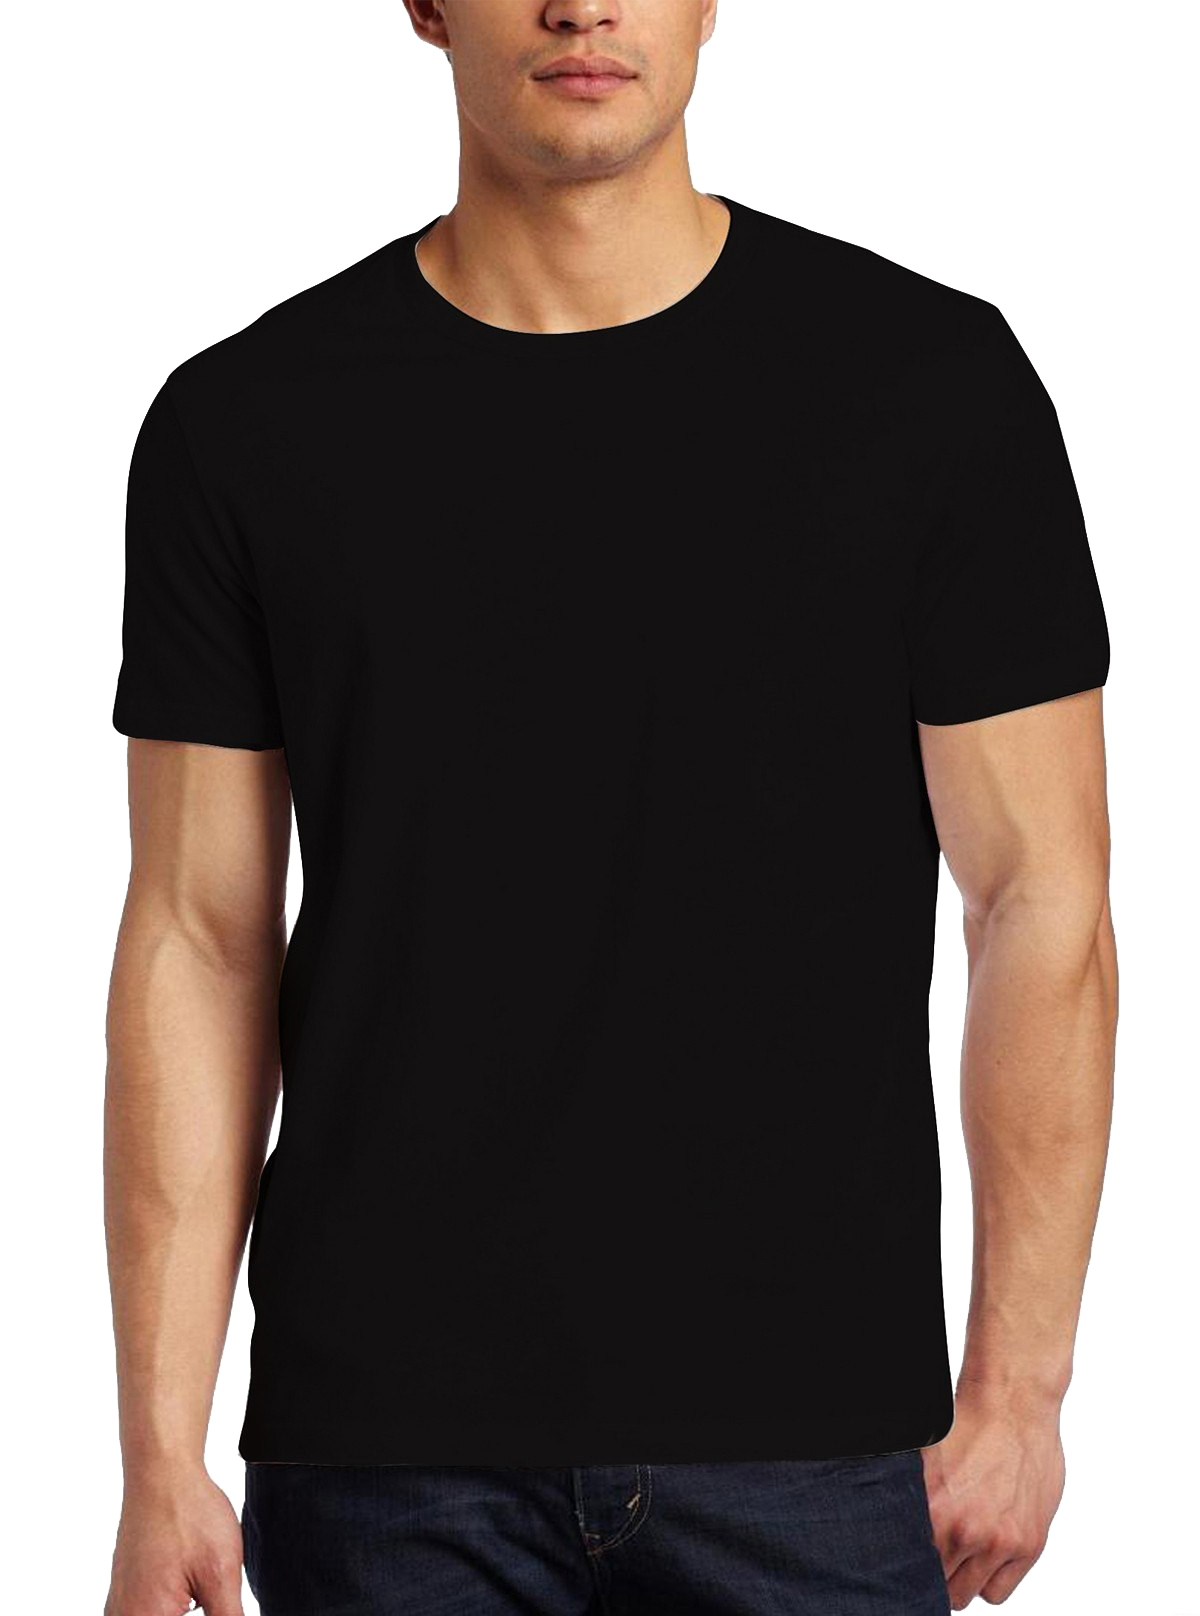 Black T-Shirt PNG Imahe Background